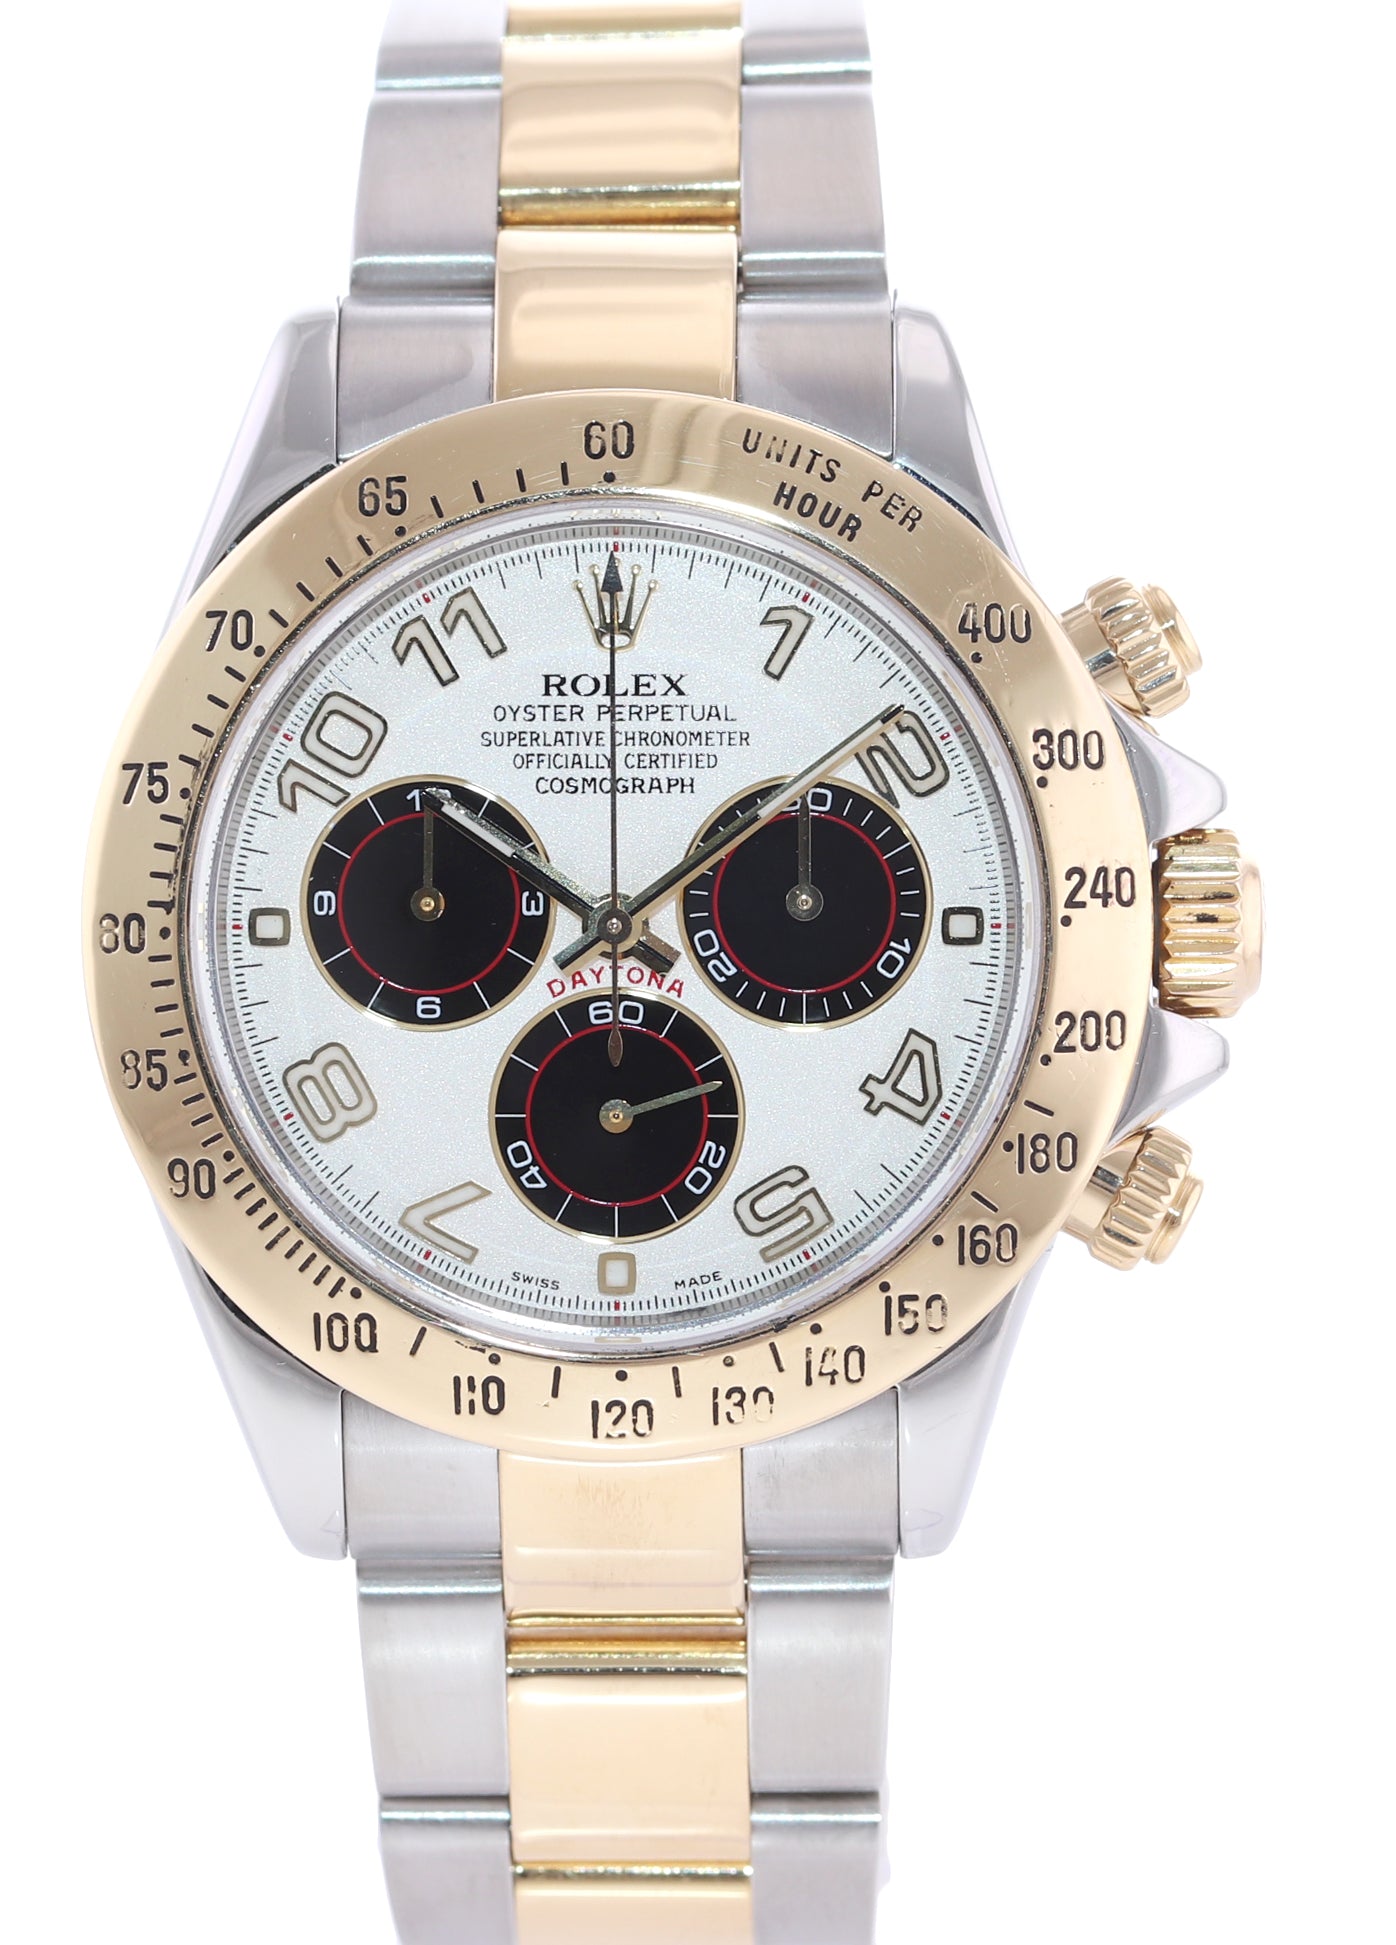 2020 RSC Paper Rolex Daytona 116523 White Panda Steel Yellow Gold Two Tone Watch